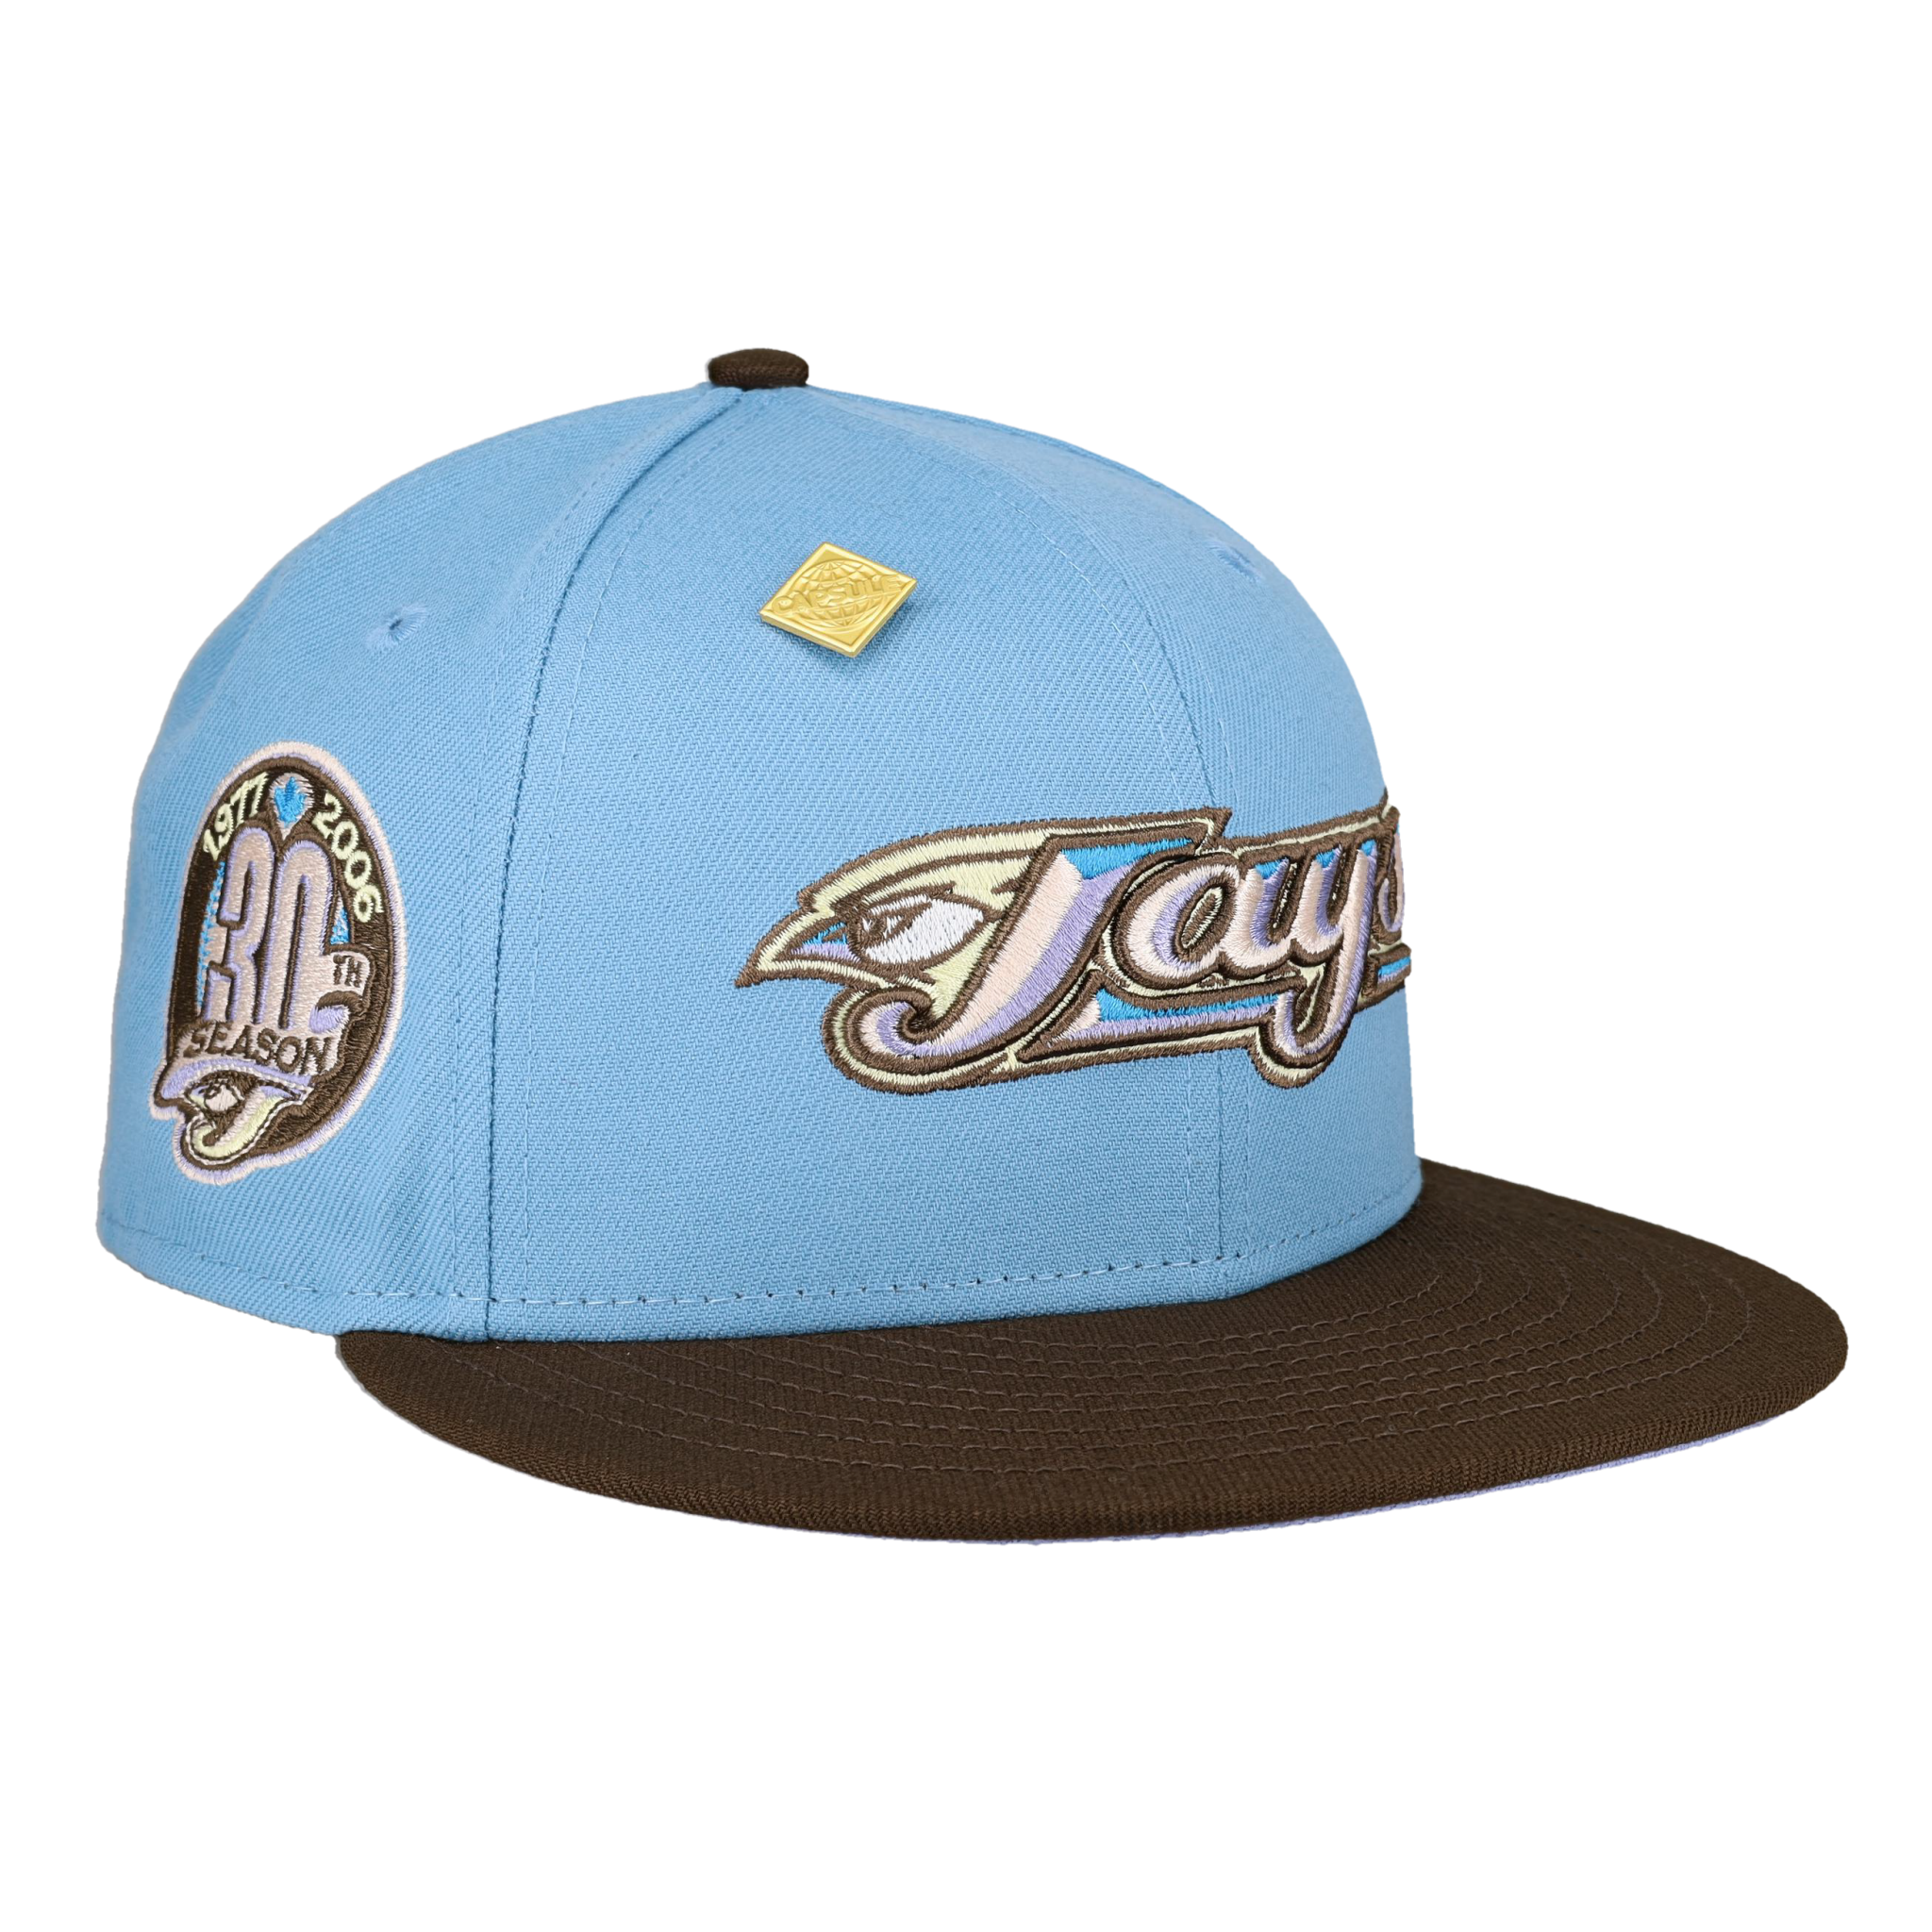 TORONTO BLUE JAYS New Era Vintage Hat Hat Cap Size 6 5/8 